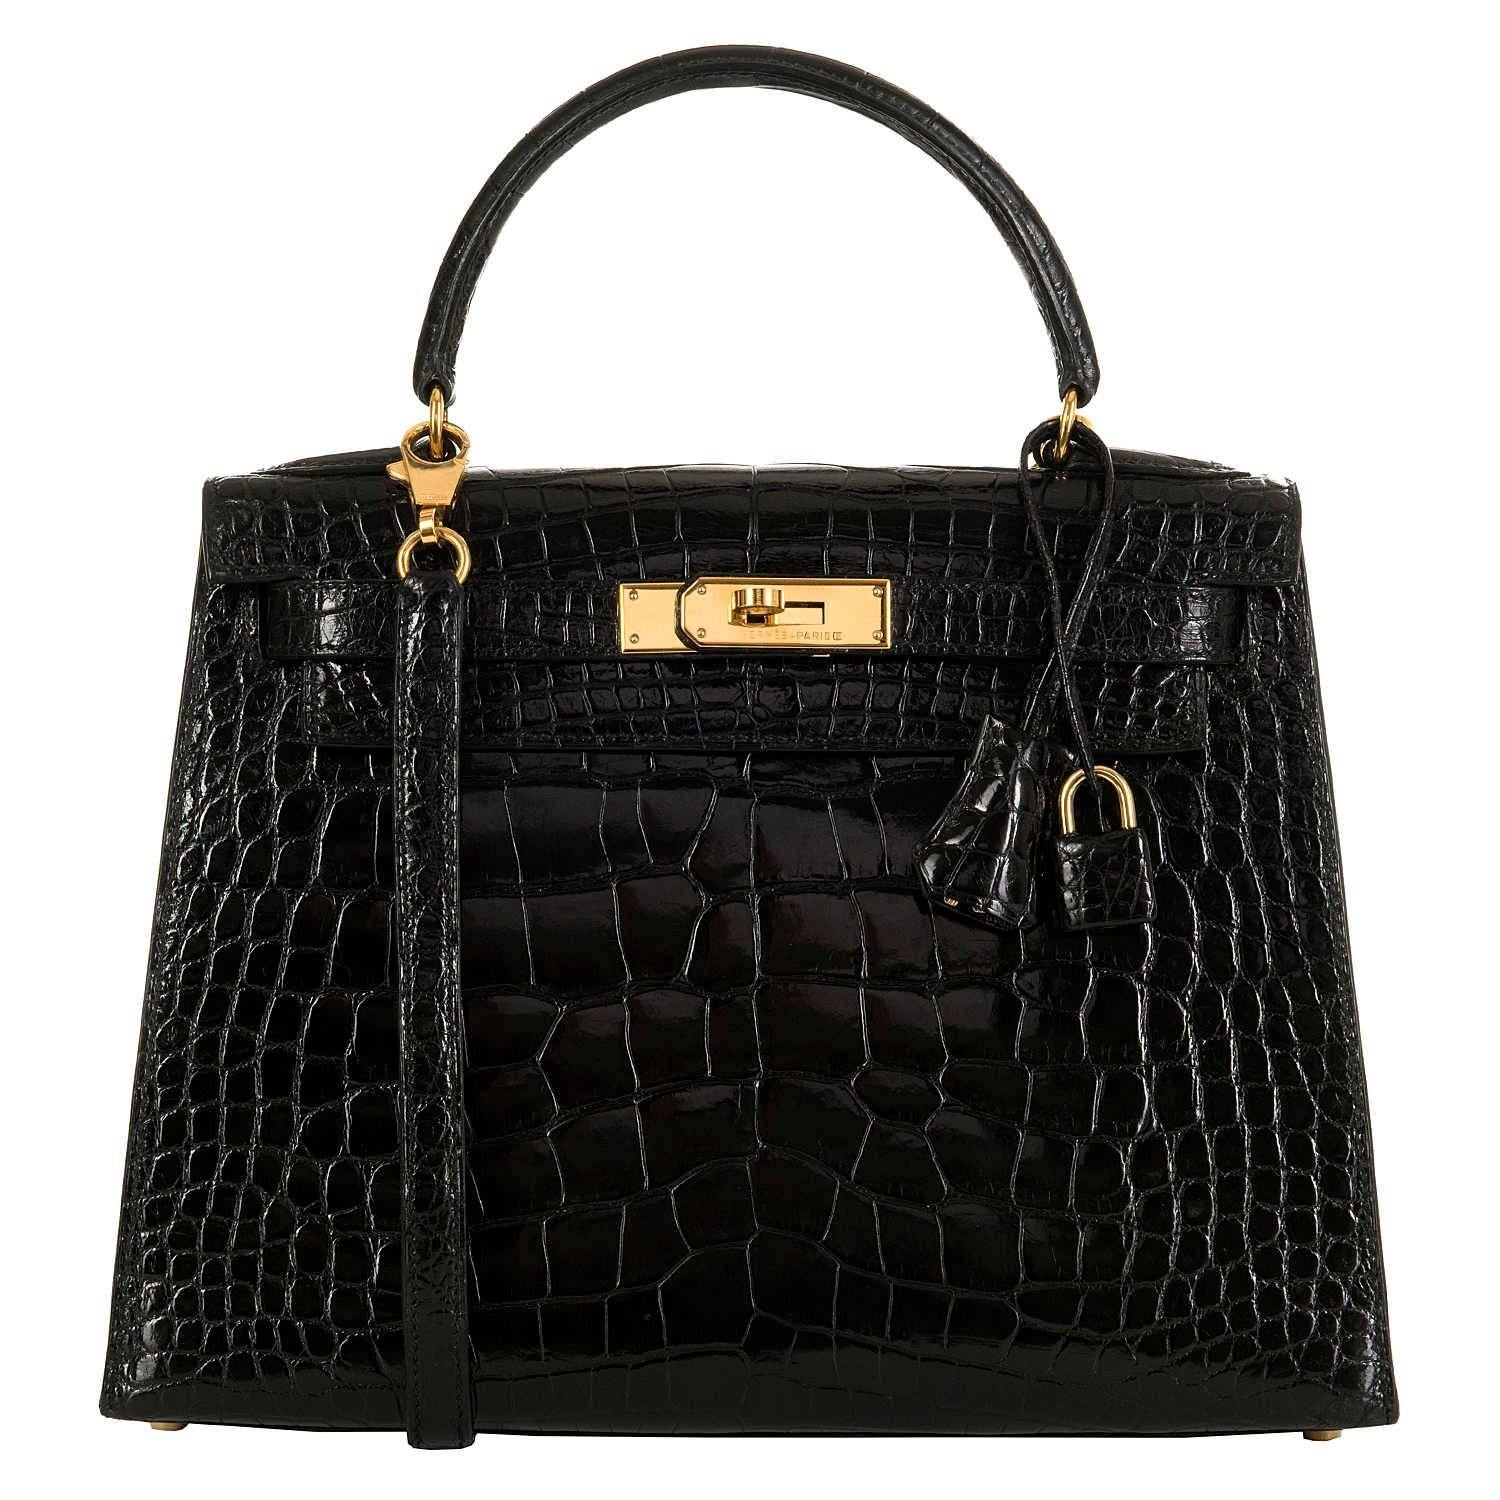 WOW Pristine Hermes 28cm Shiny Black Crocodile Alligator Kelly Bag with Gold HW